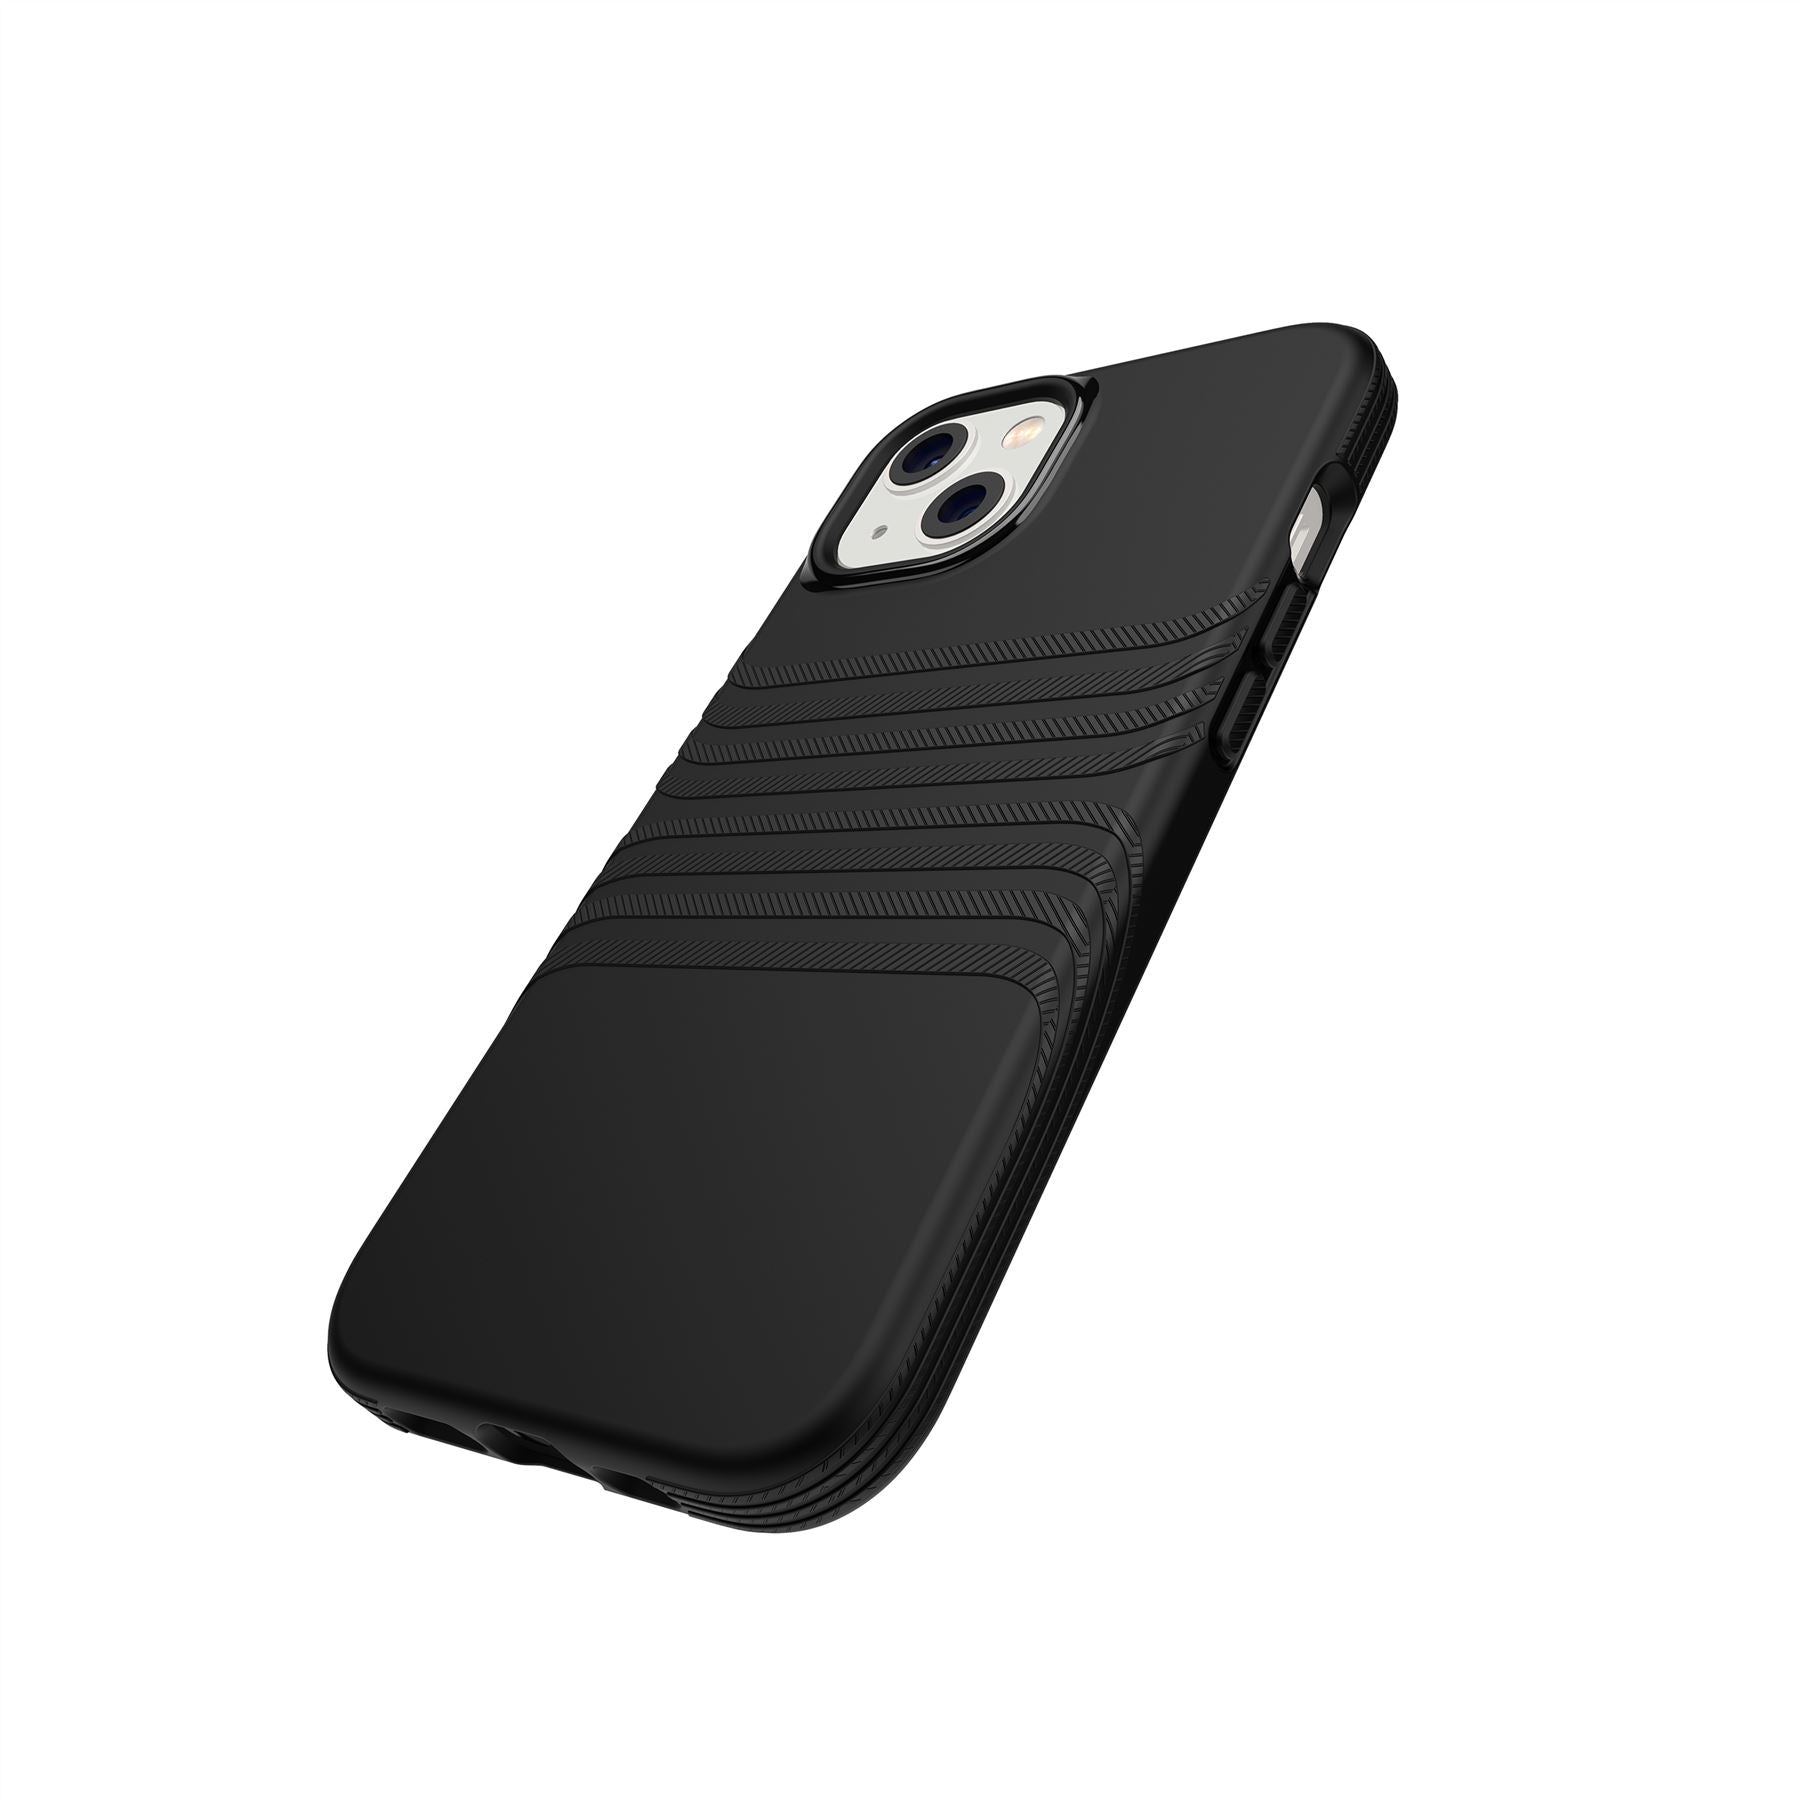 Black iPhone 11 Pro Max Gaming Phone Case